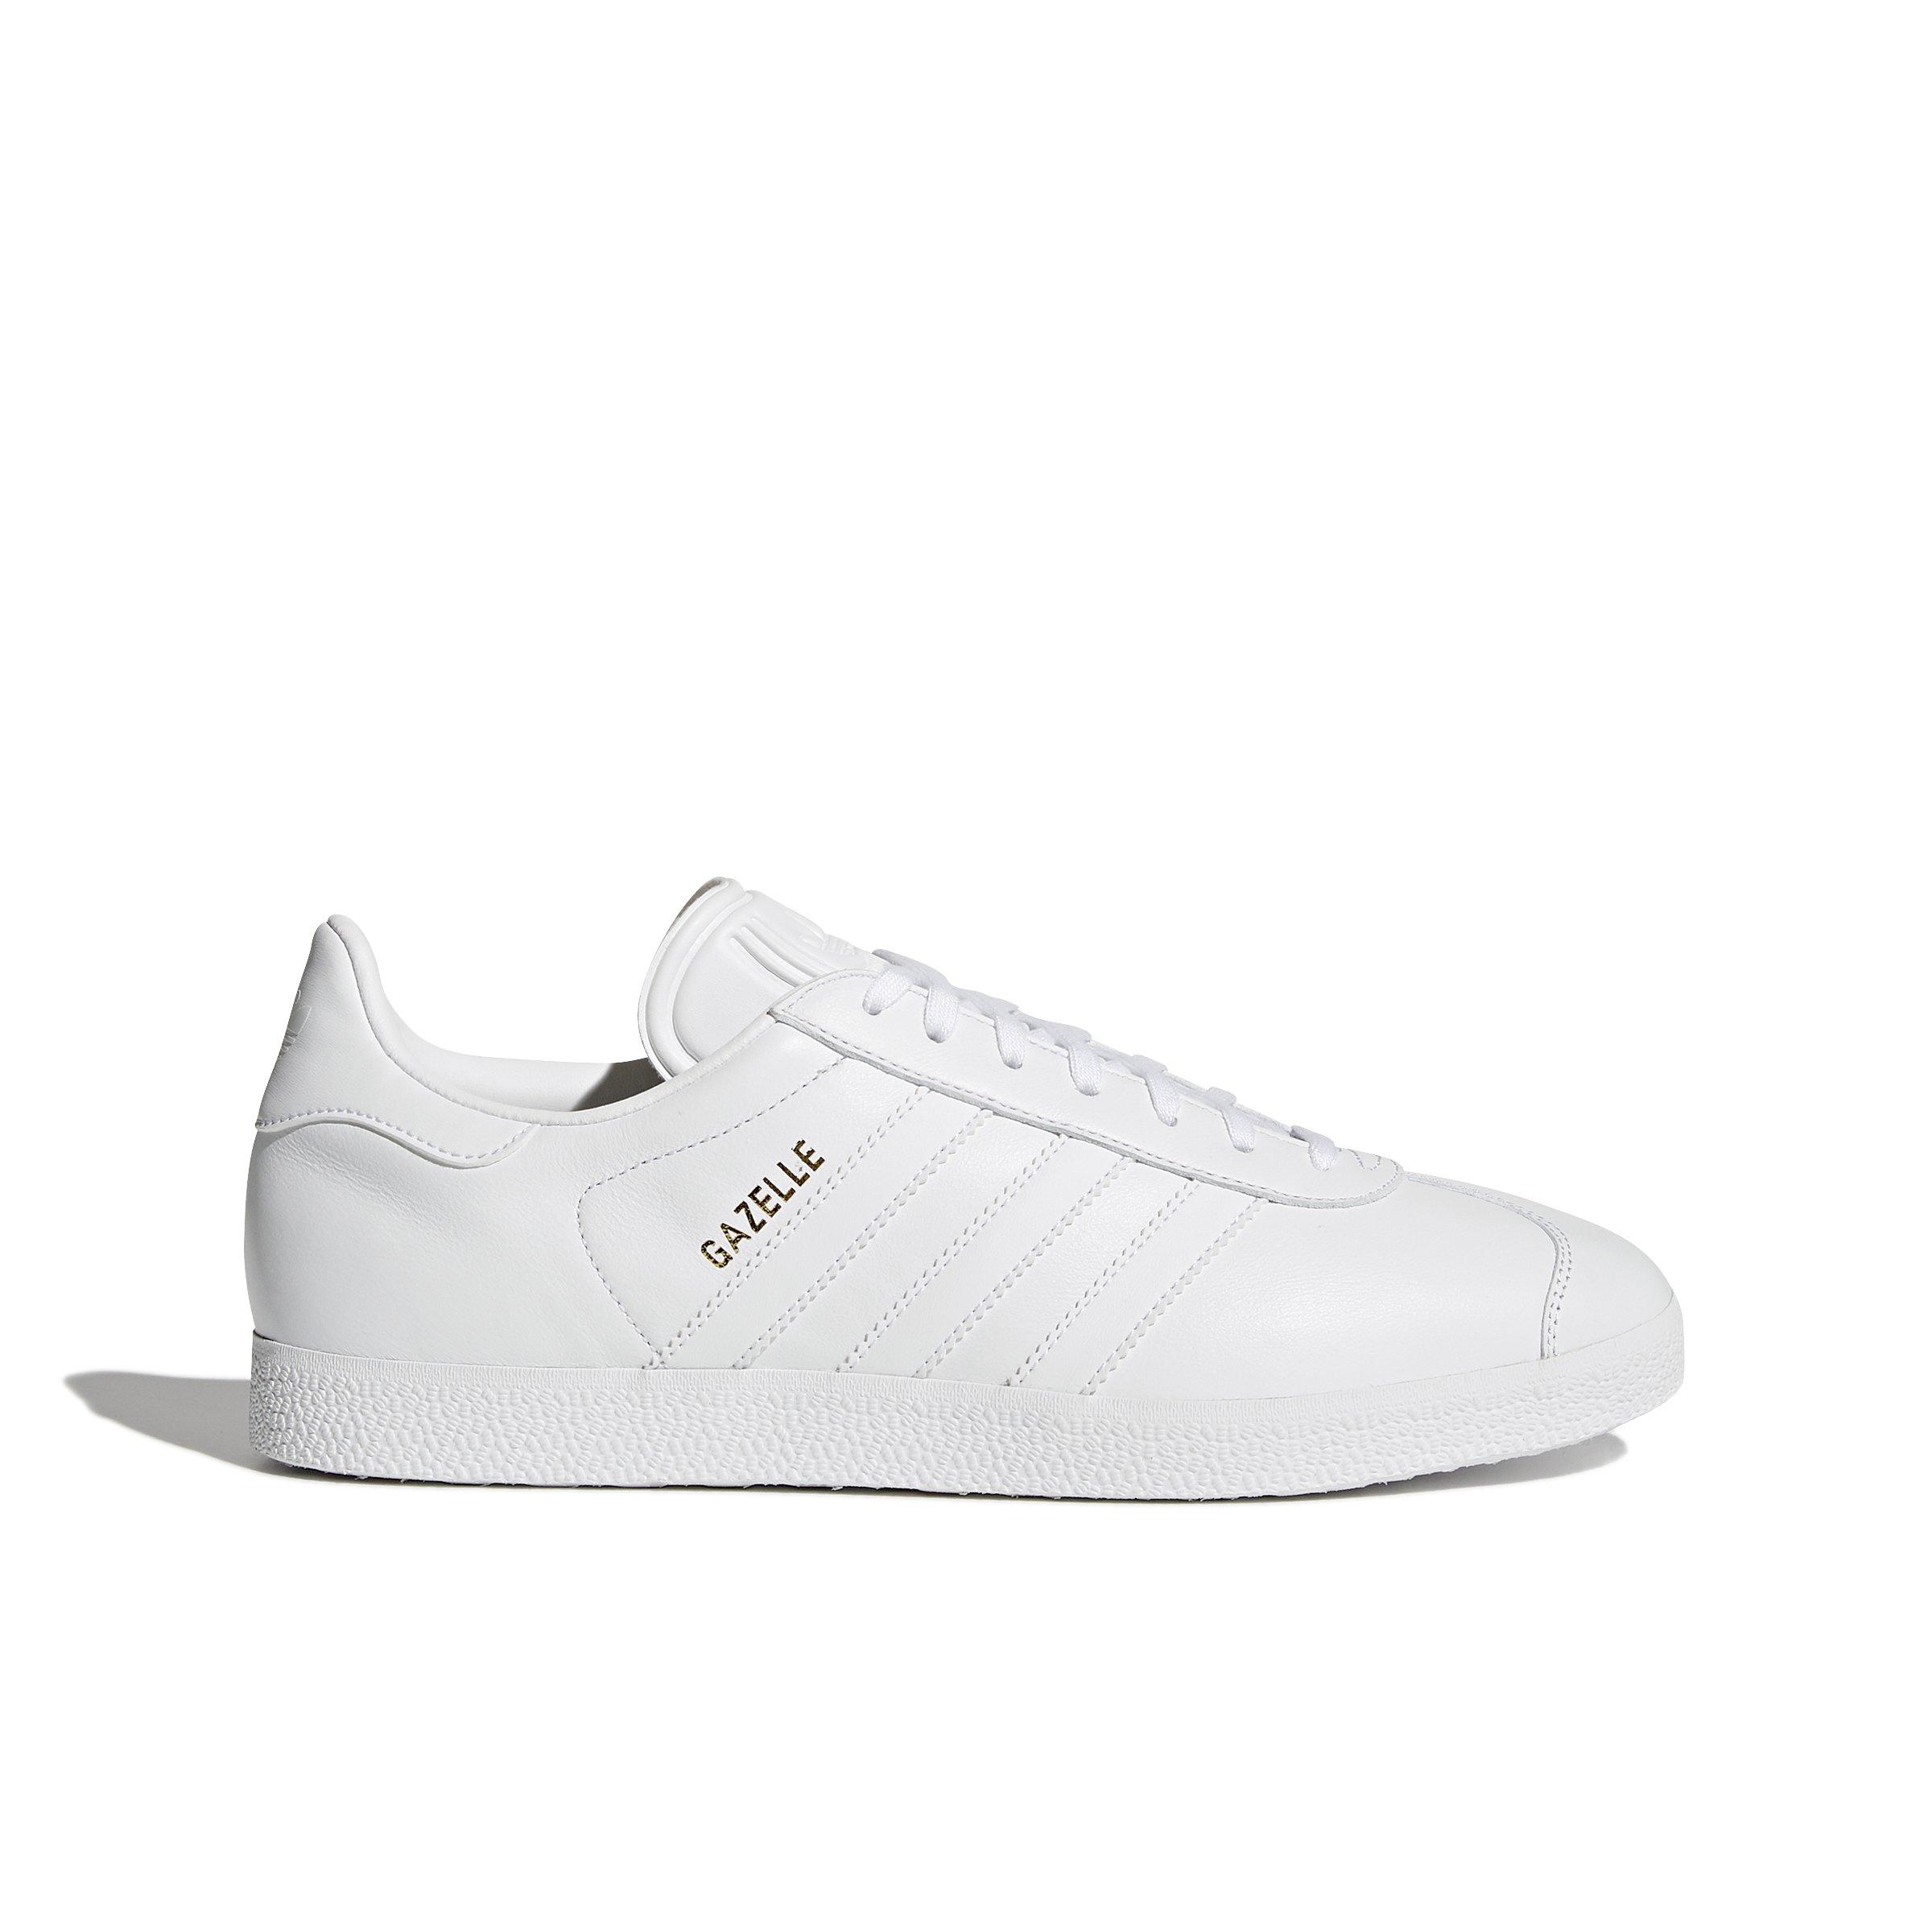 adidas Originals White/Ftwr White/Gold Metallic" Shoe